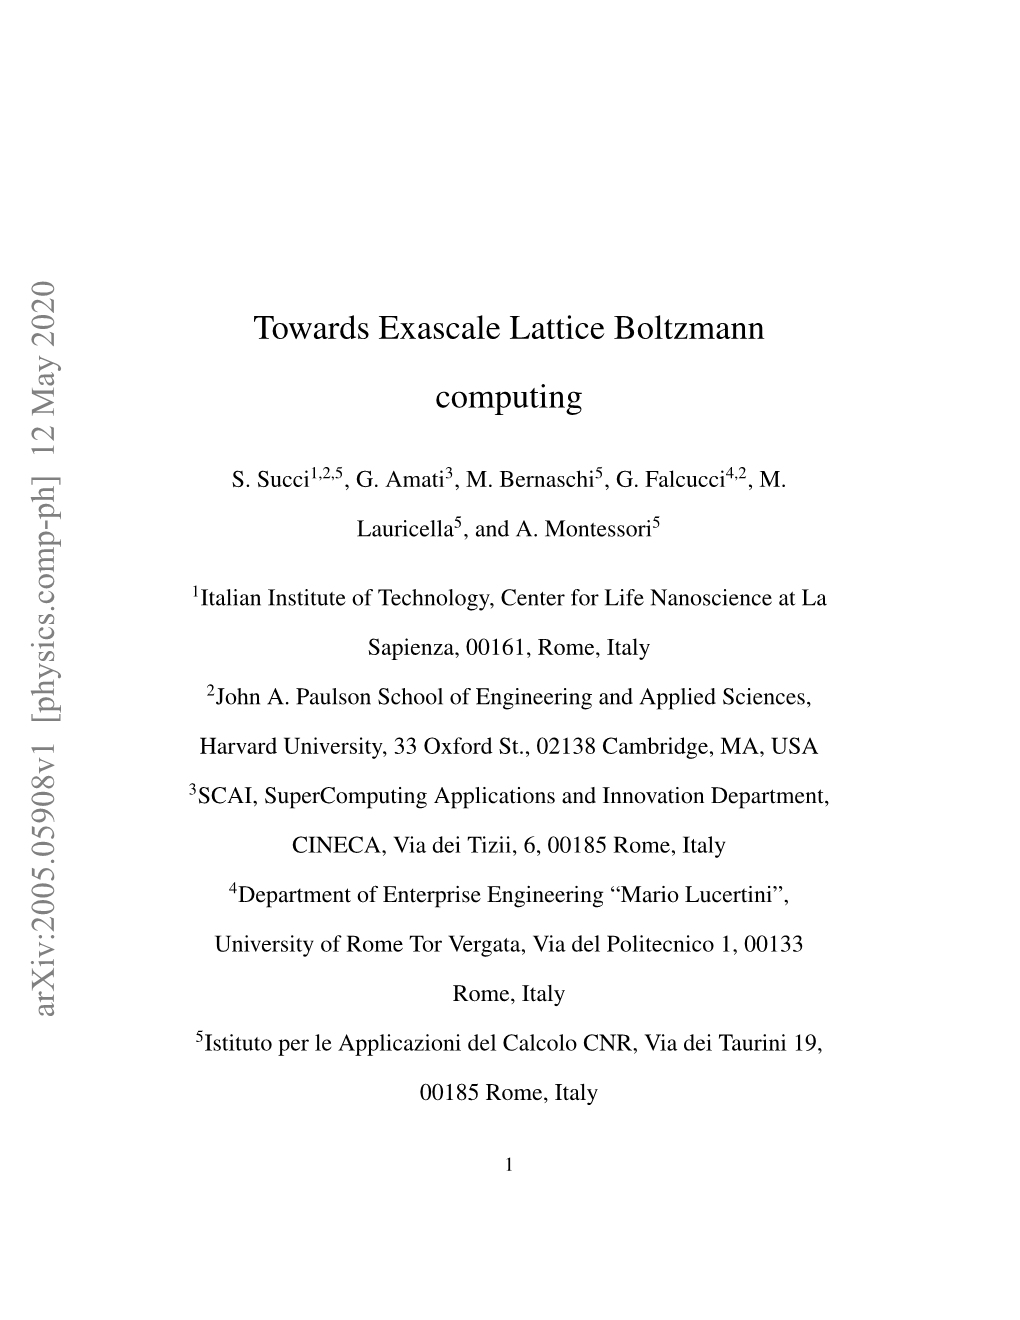 Towards Exascale Lattice Boltzmann Computing Arxiv:2005.05908V1